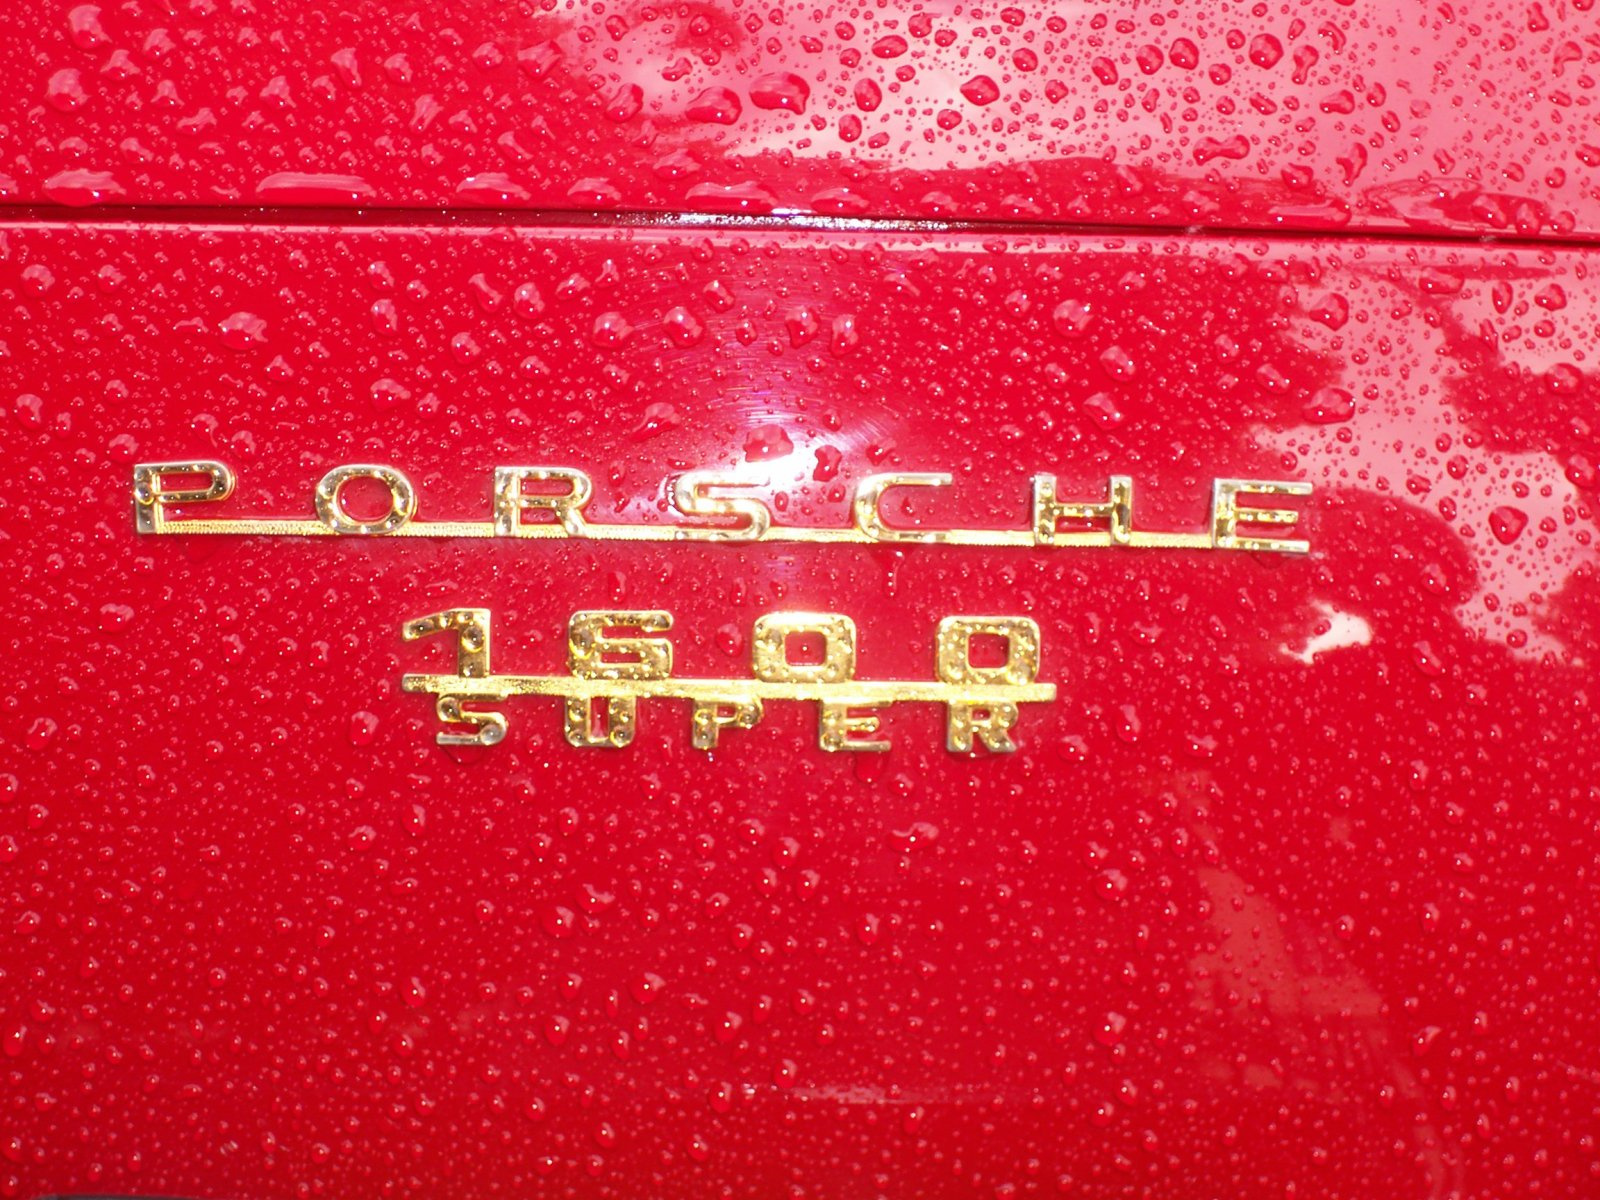 Porsche 1600 Super